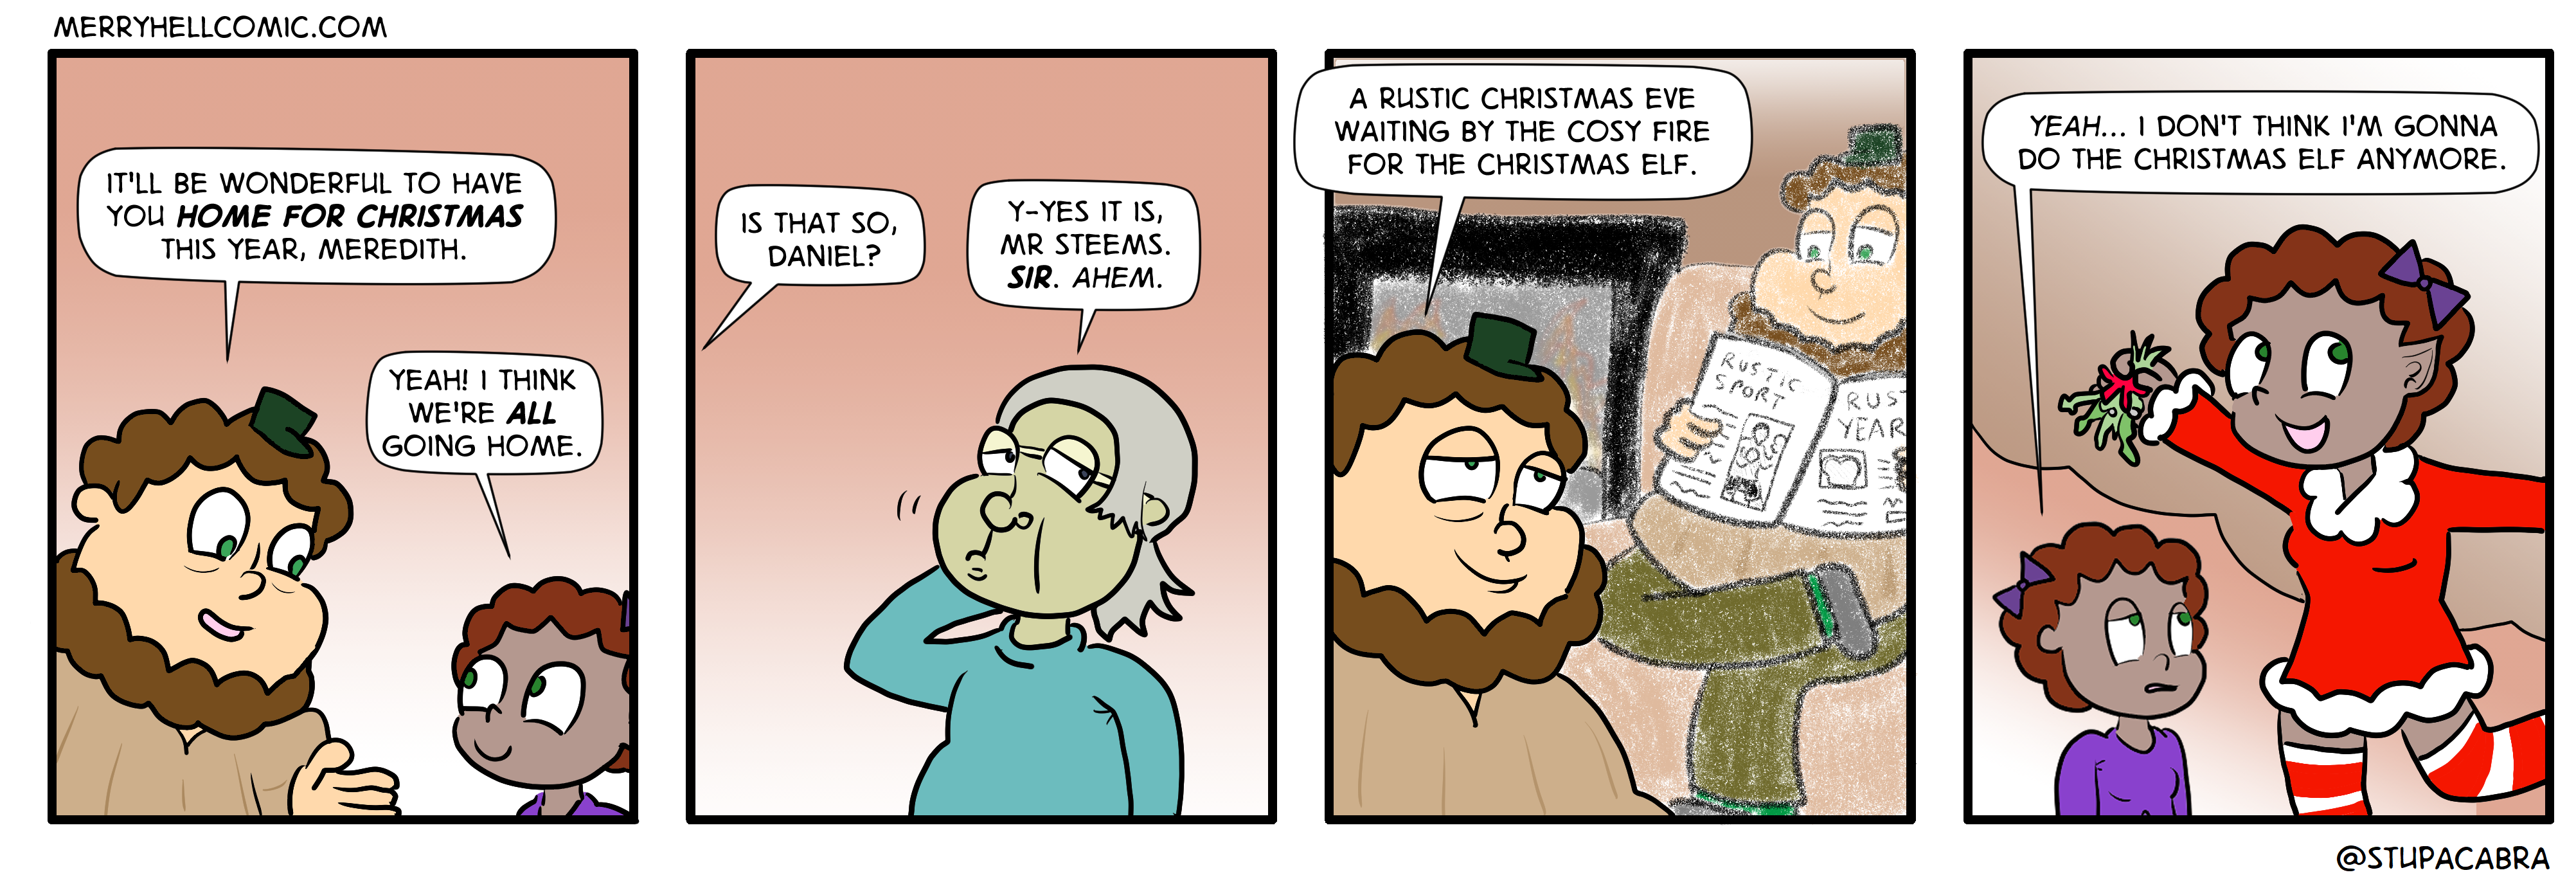 525. Rustic Christmas